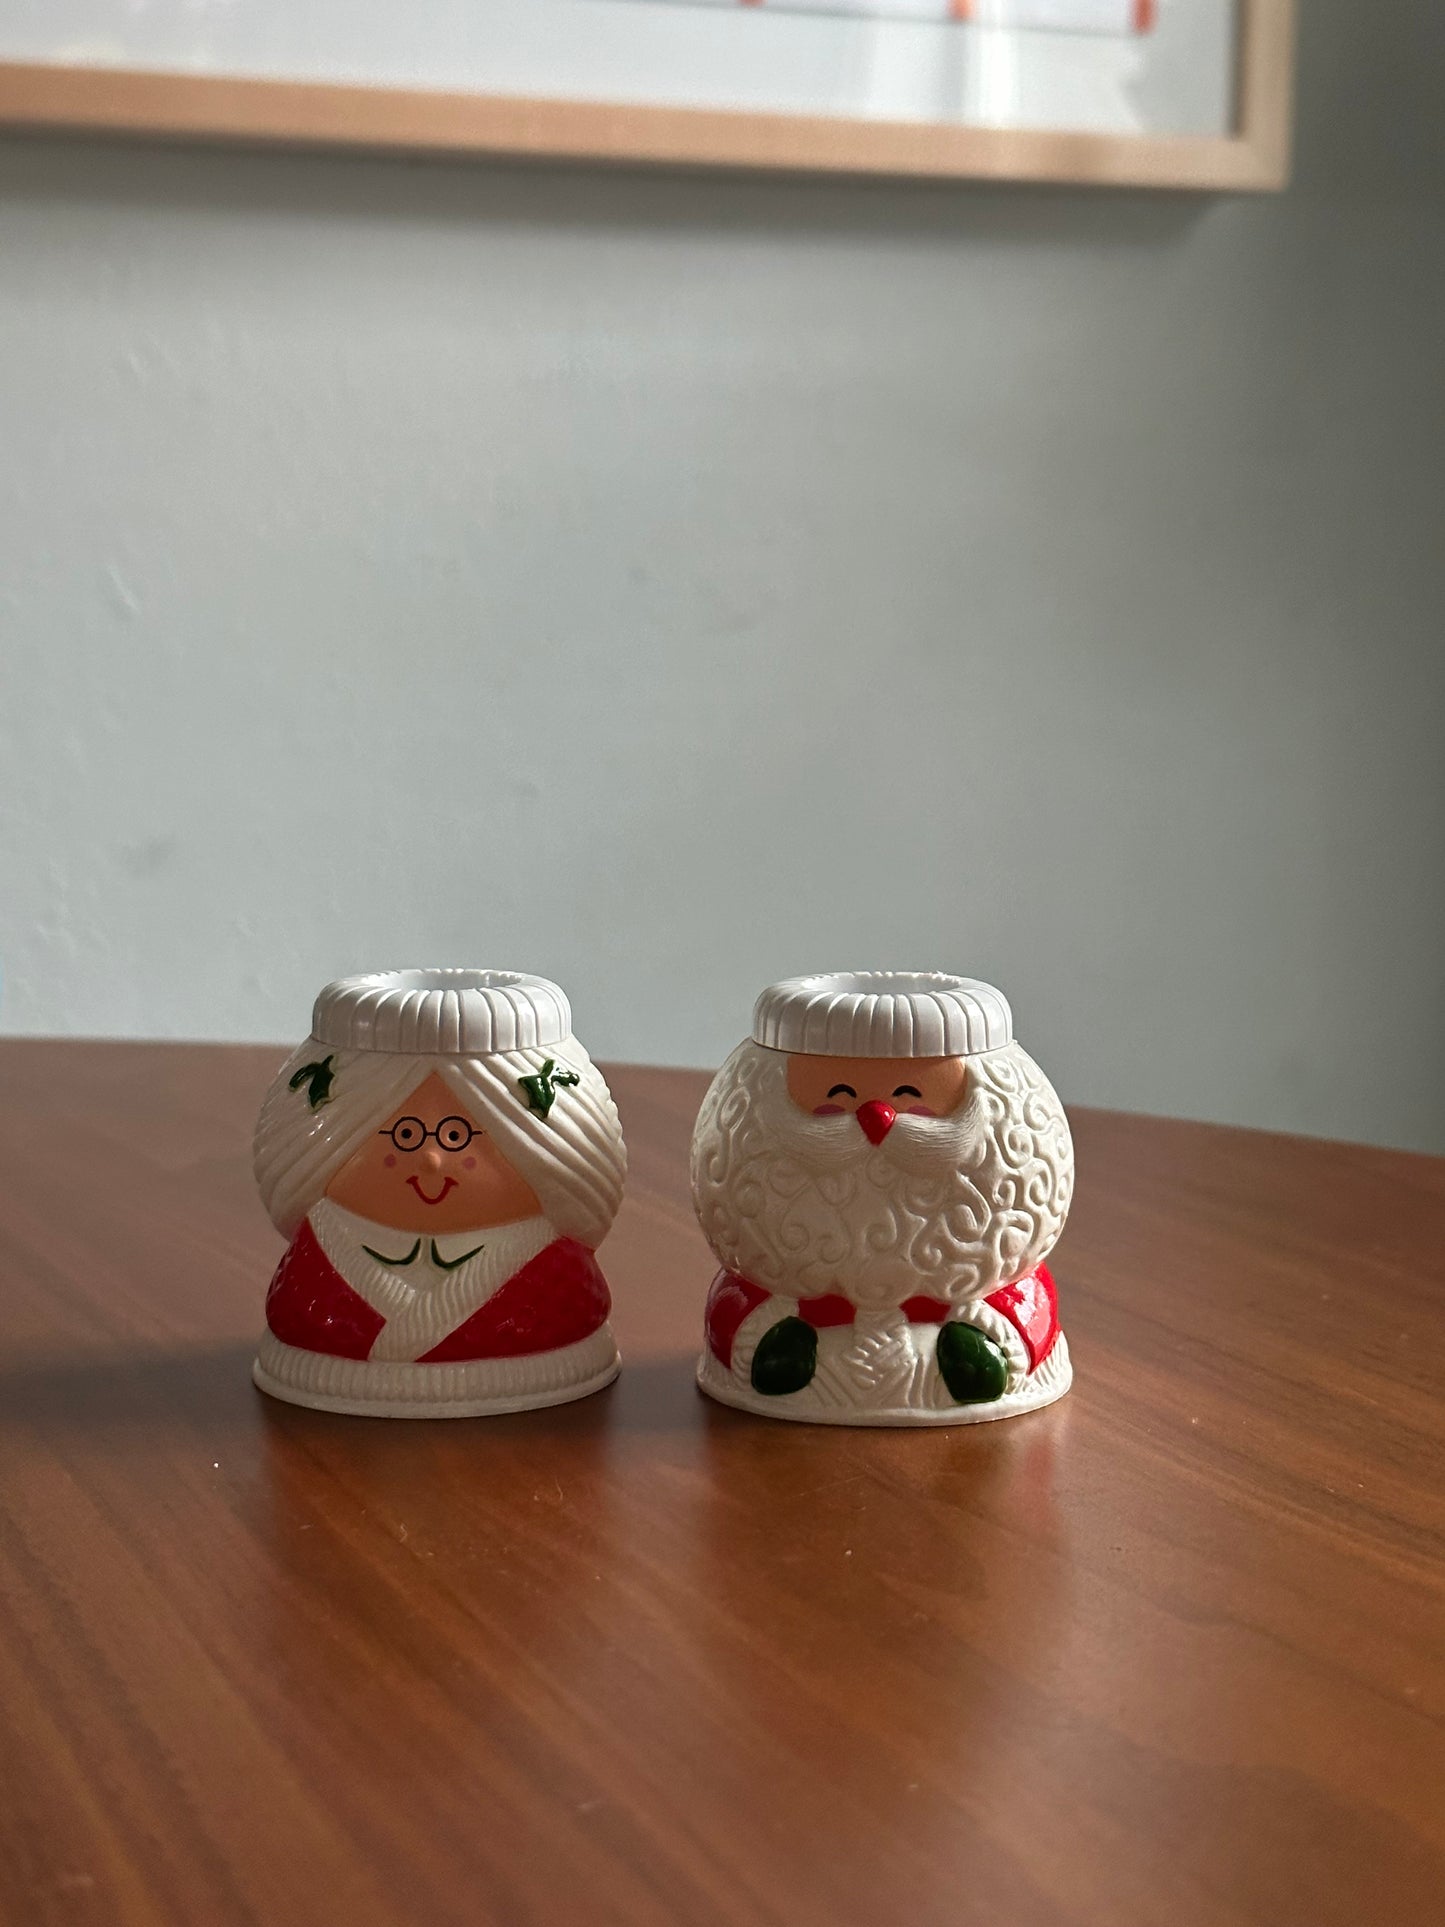 Mrs. and Mr. Santa Claus Candlesticks